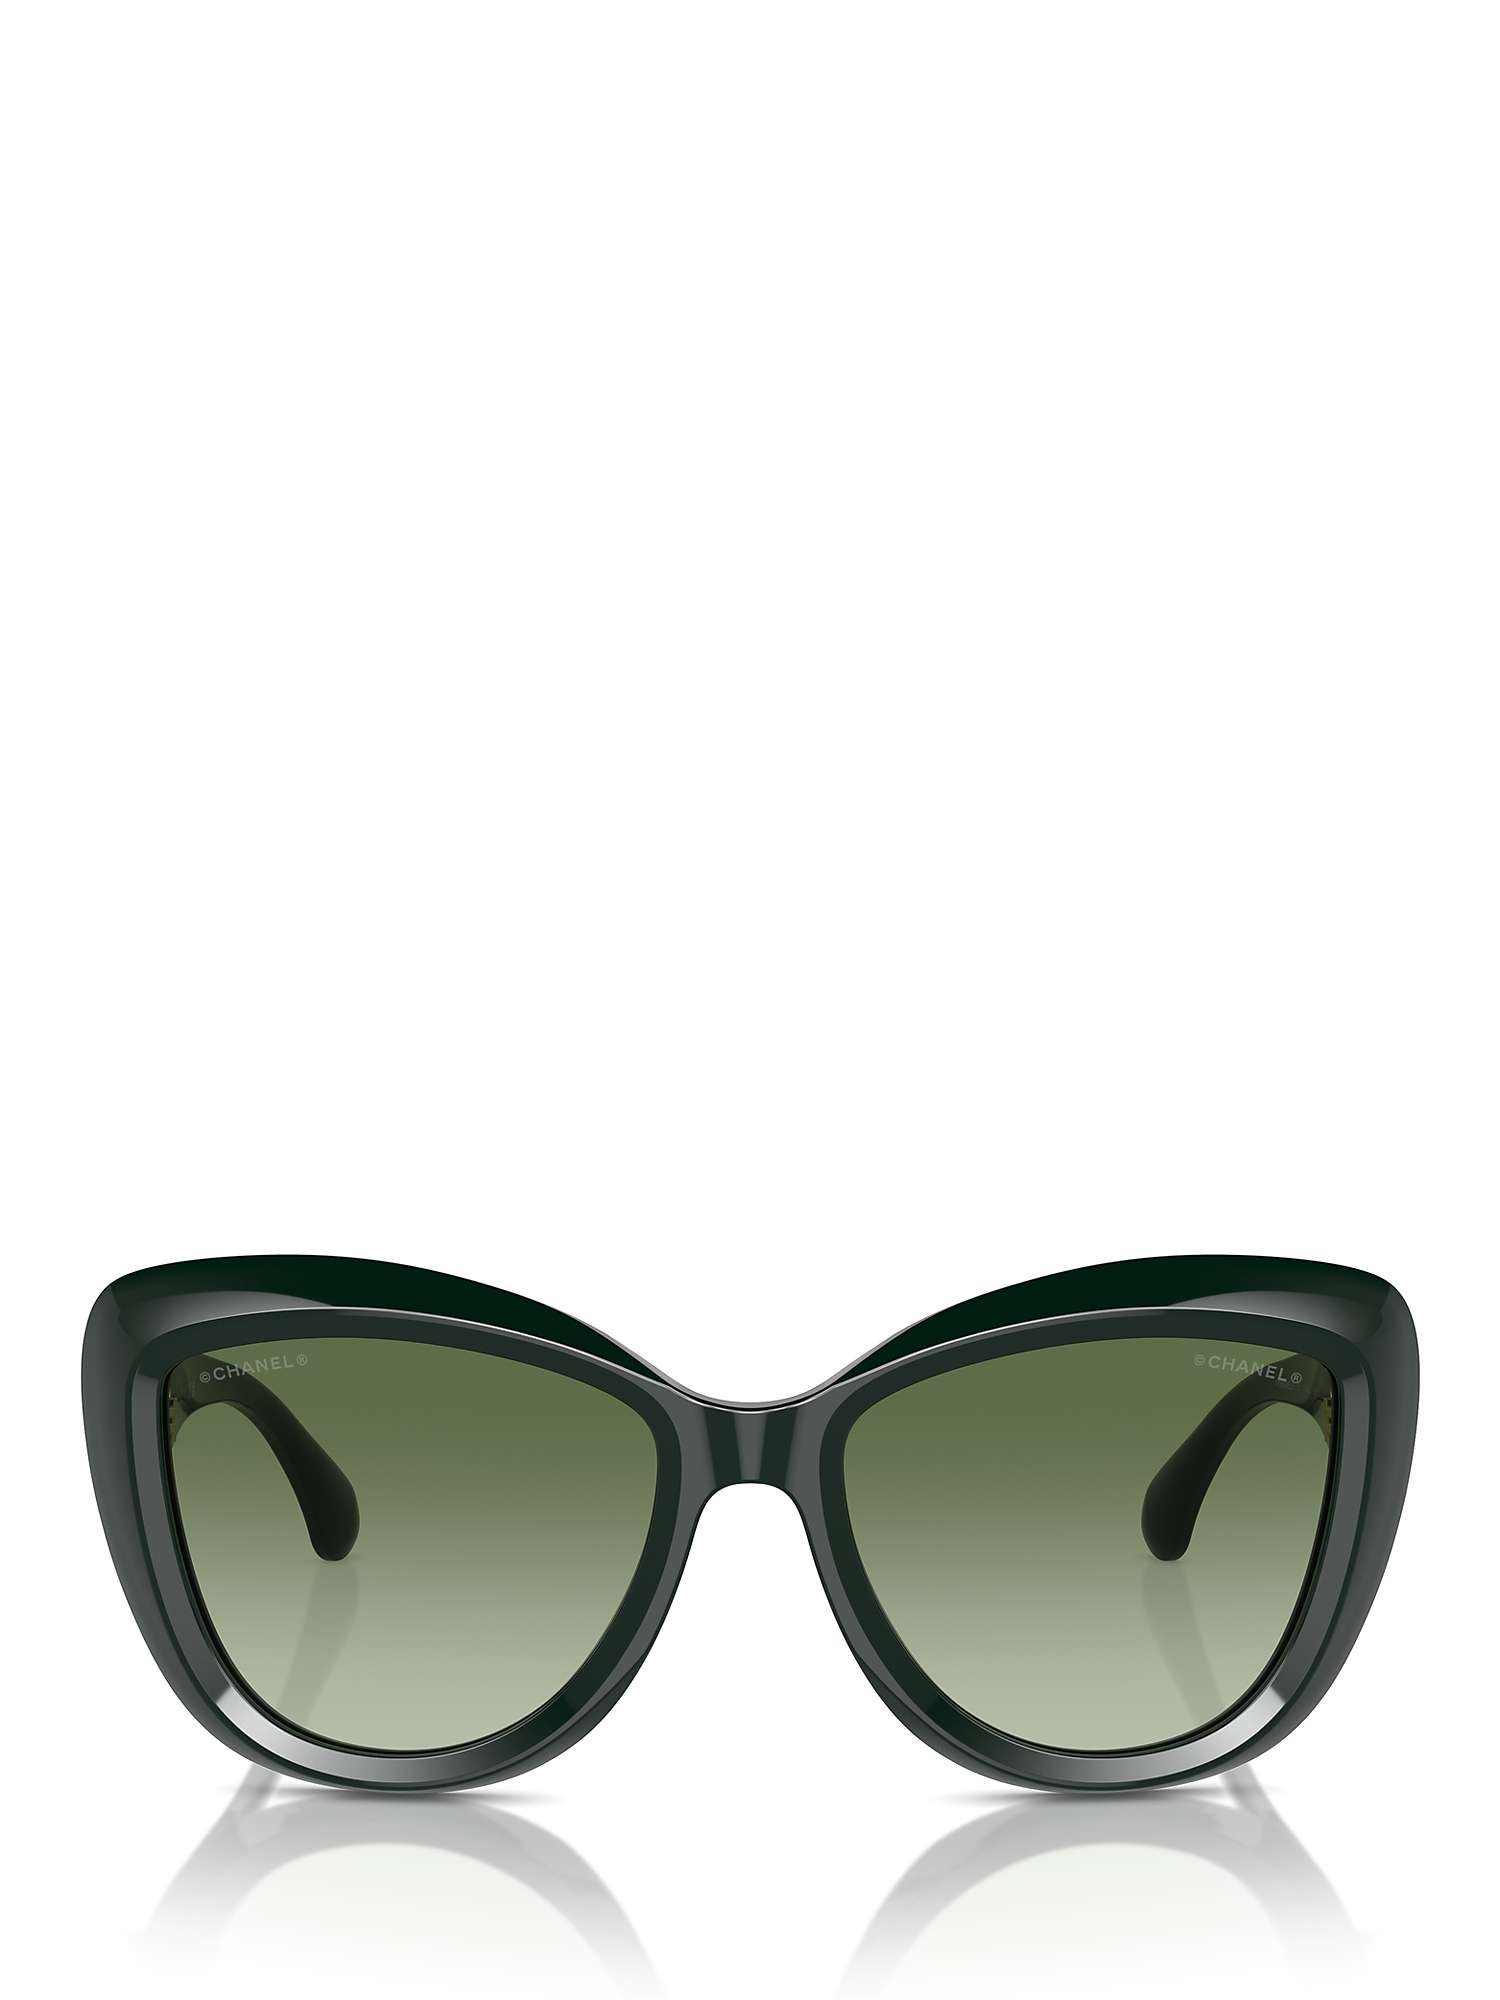 Buy CHANEL Cat Eye Sunglasses CH5517 Green Vendome/Green Gradient Online at johnlewis.com